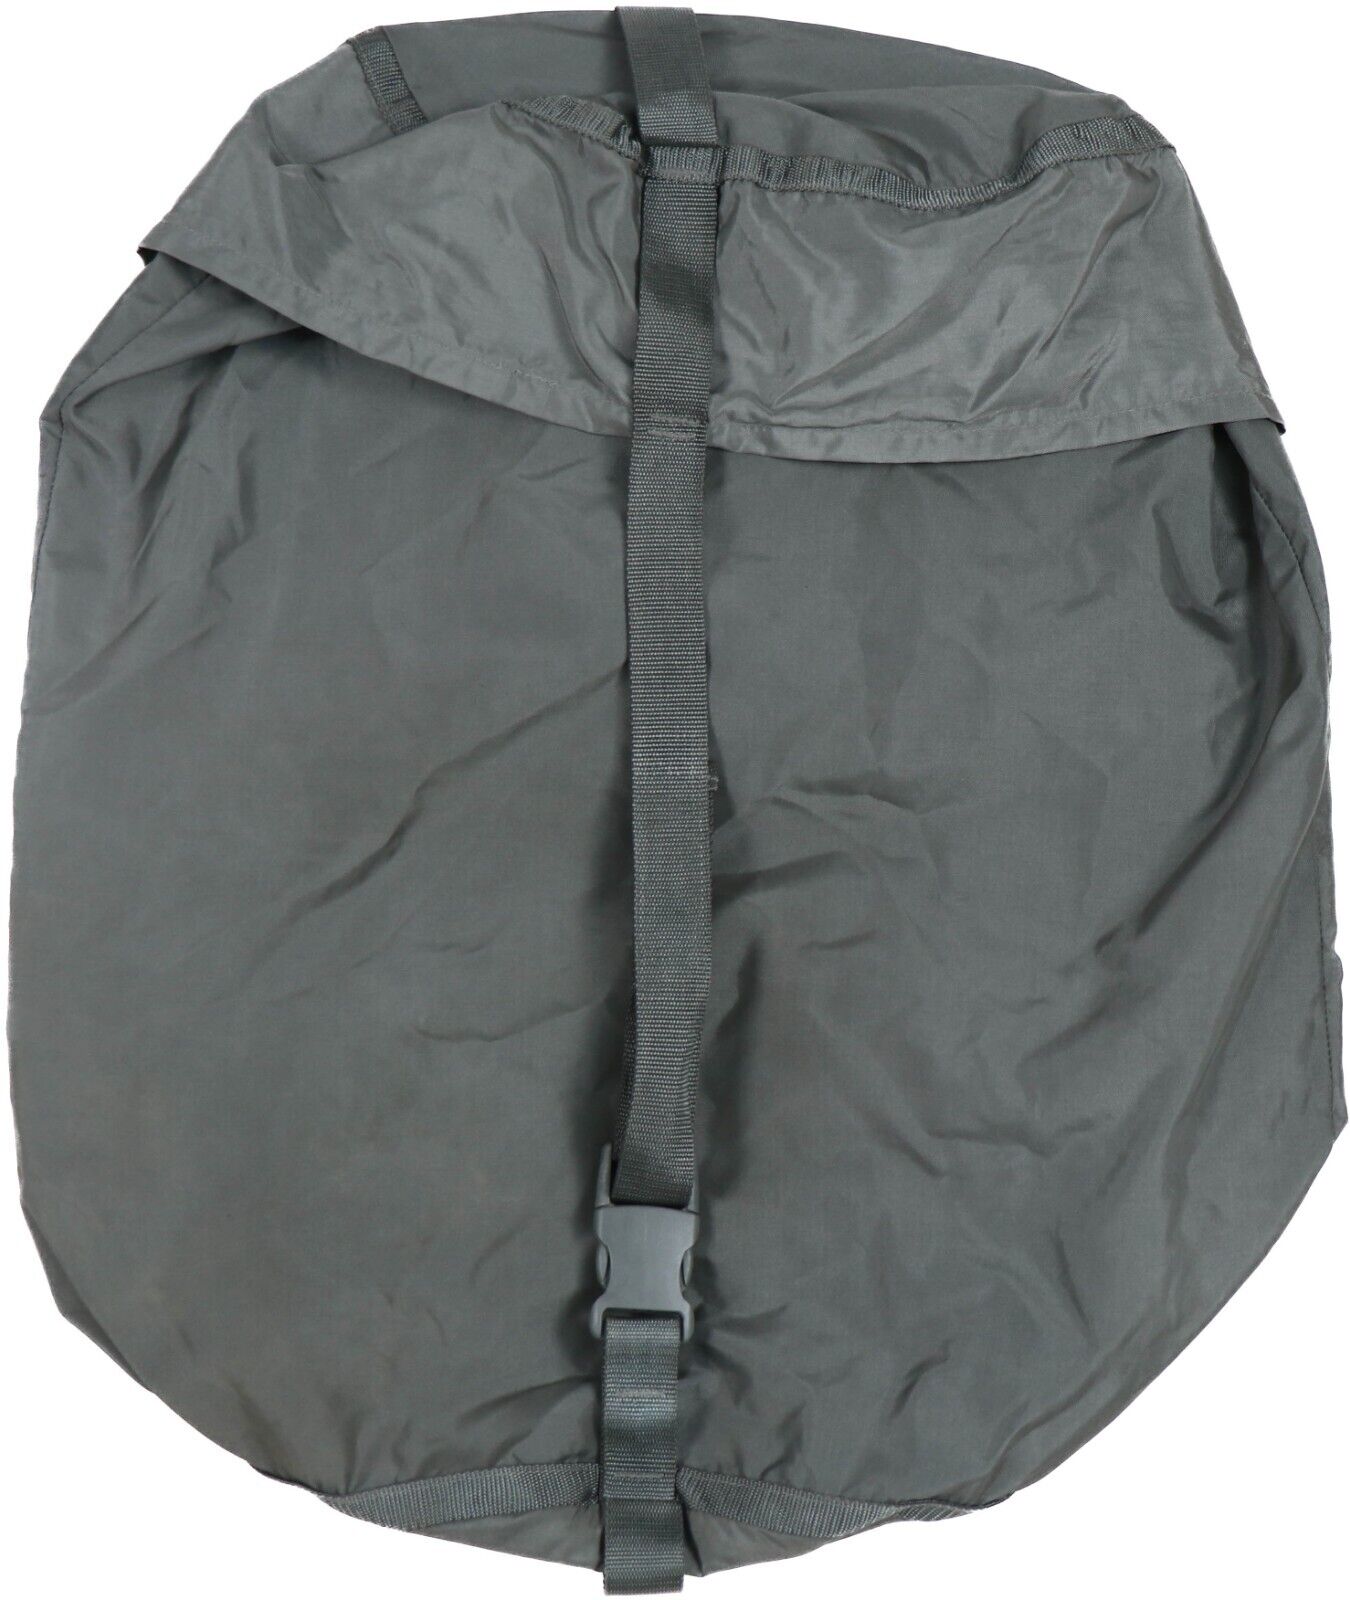 Small - Foliage Green Compression Stuff Sack Modular Sleeping Bag MSS Sack Pack